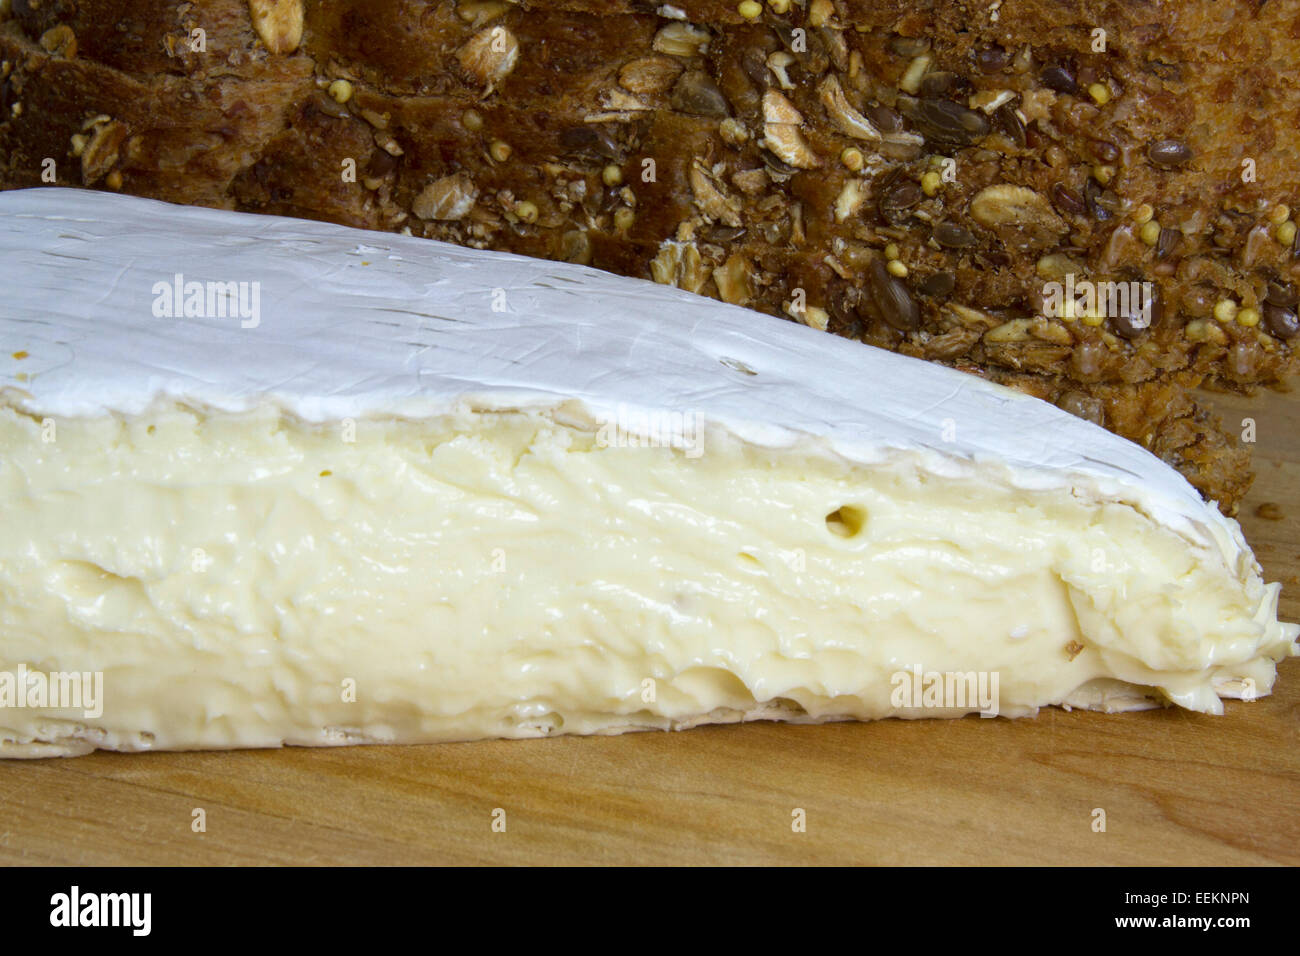 Keil Brie Käse auf Holzbrett mit Vollkorn Brot Stockfoto